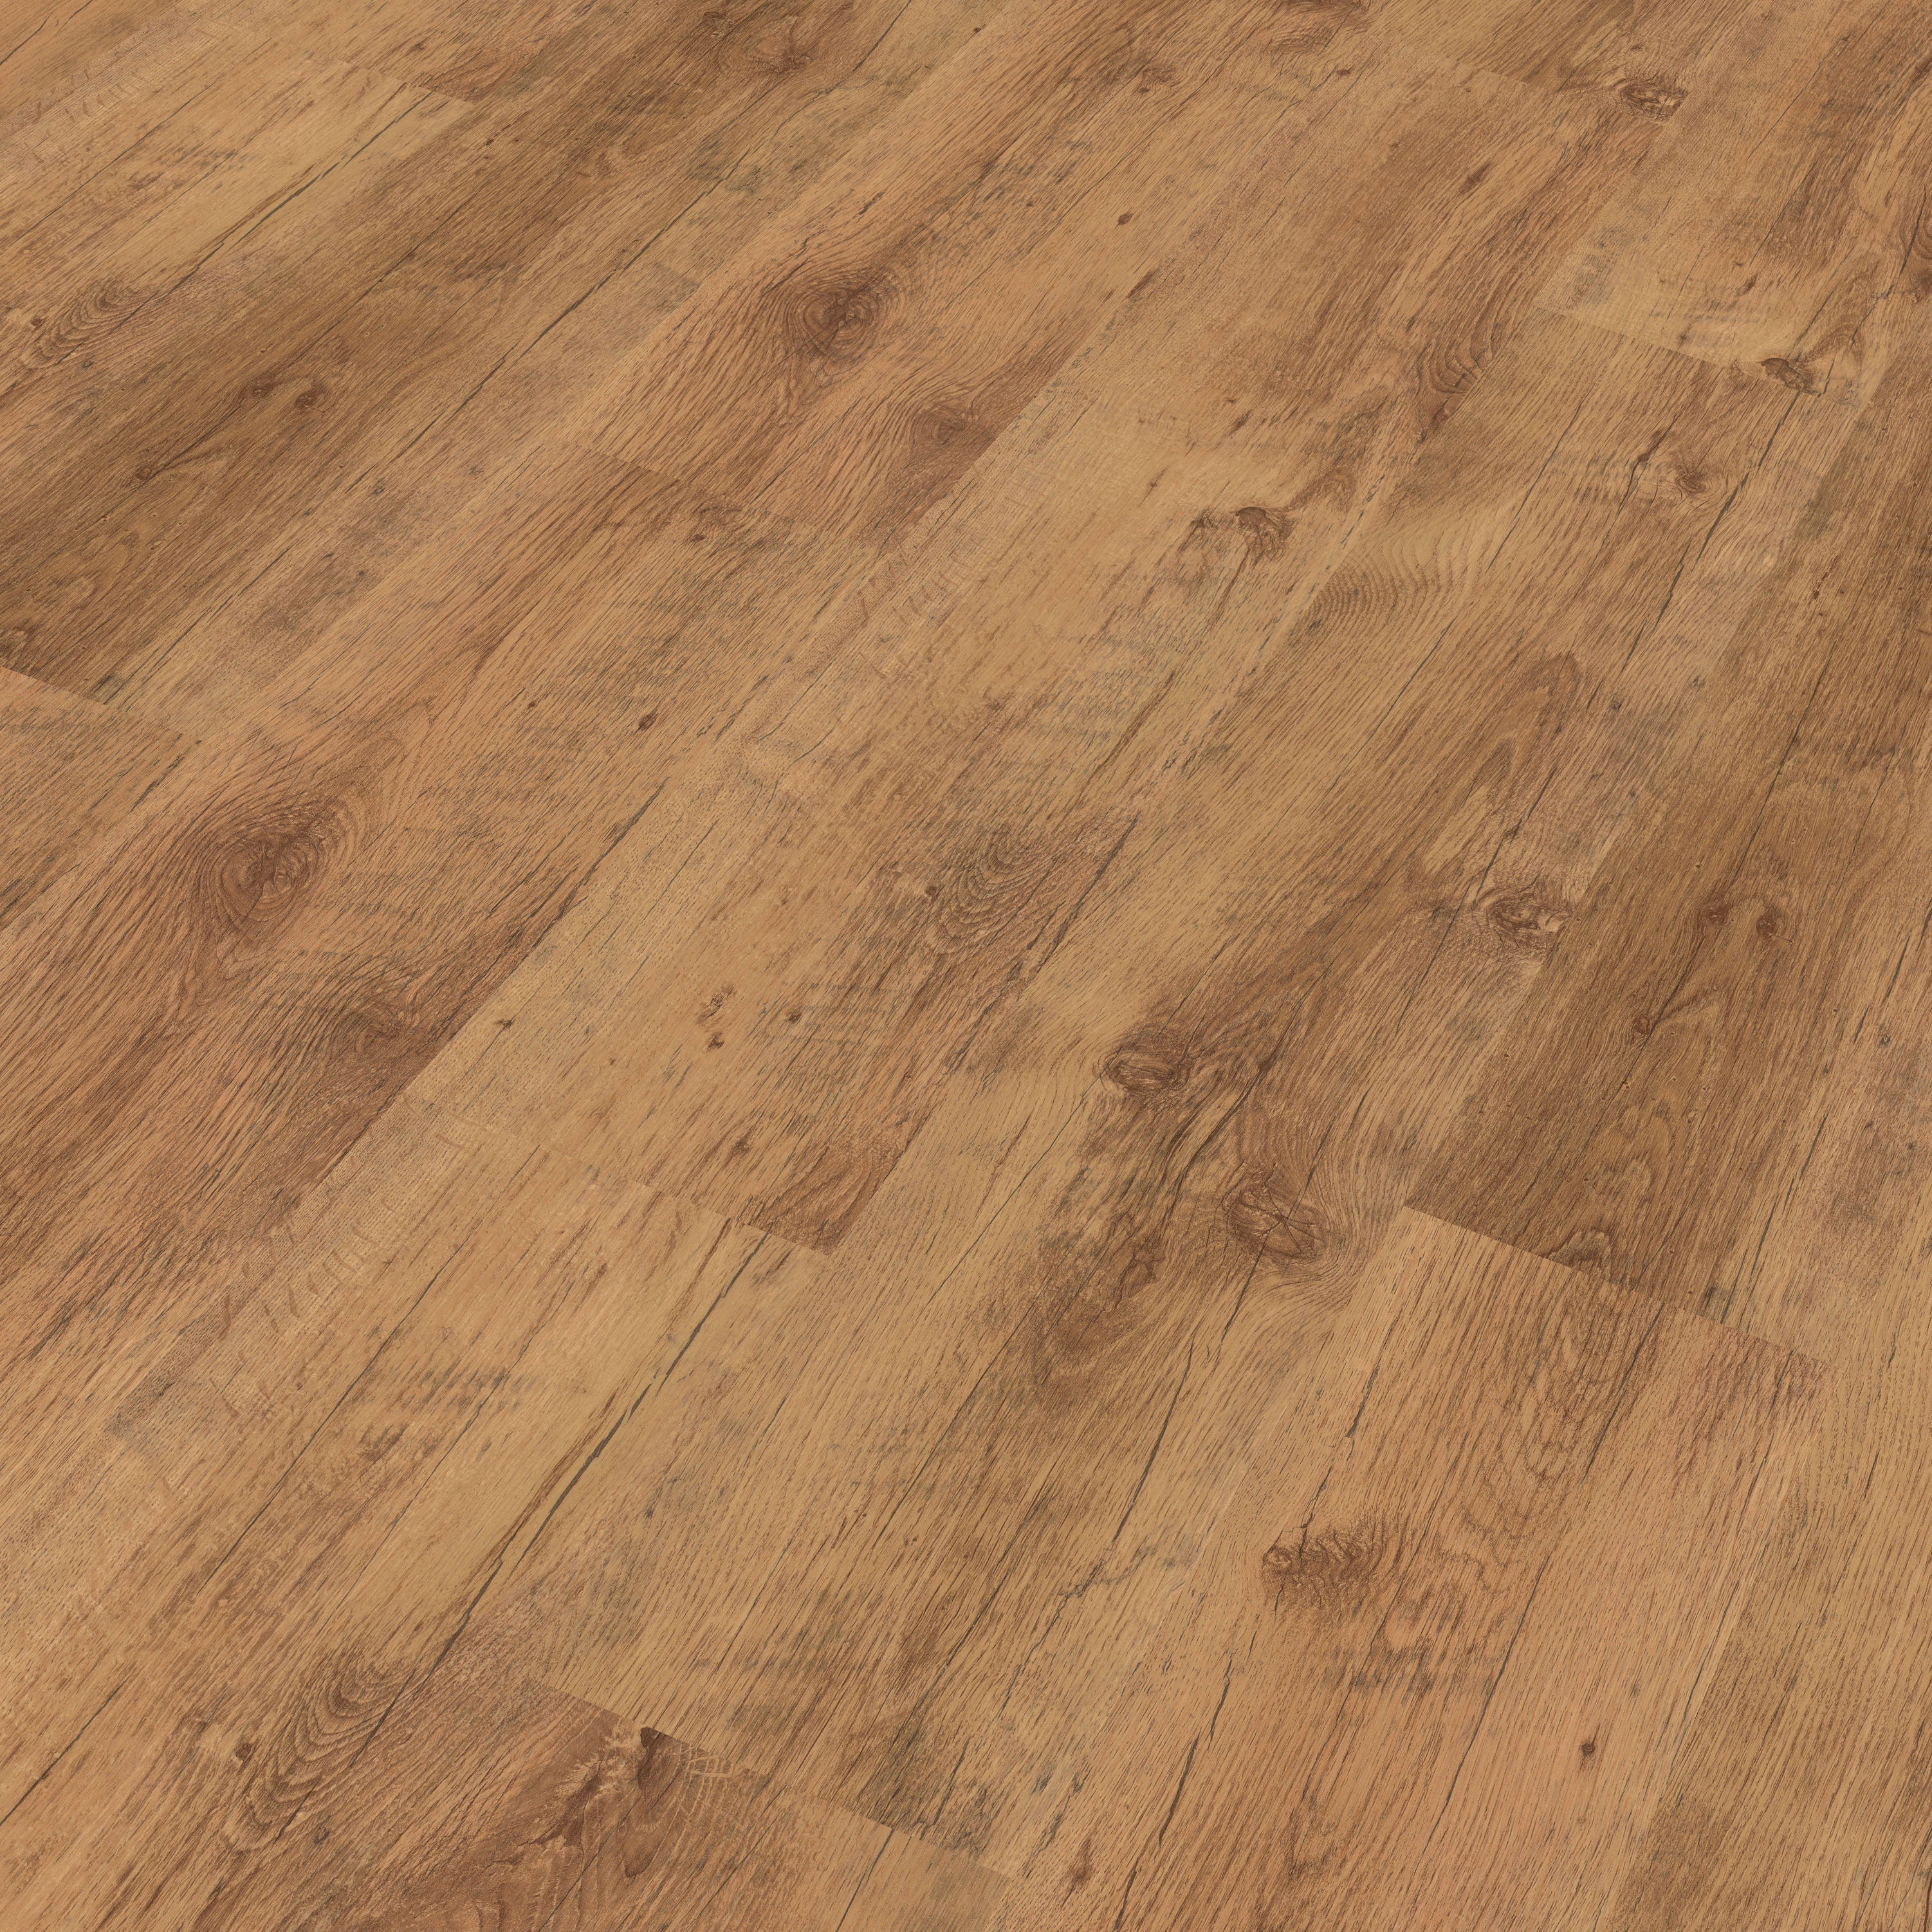 Everley Oak 6mm Laminate Flooring - 2.74m2